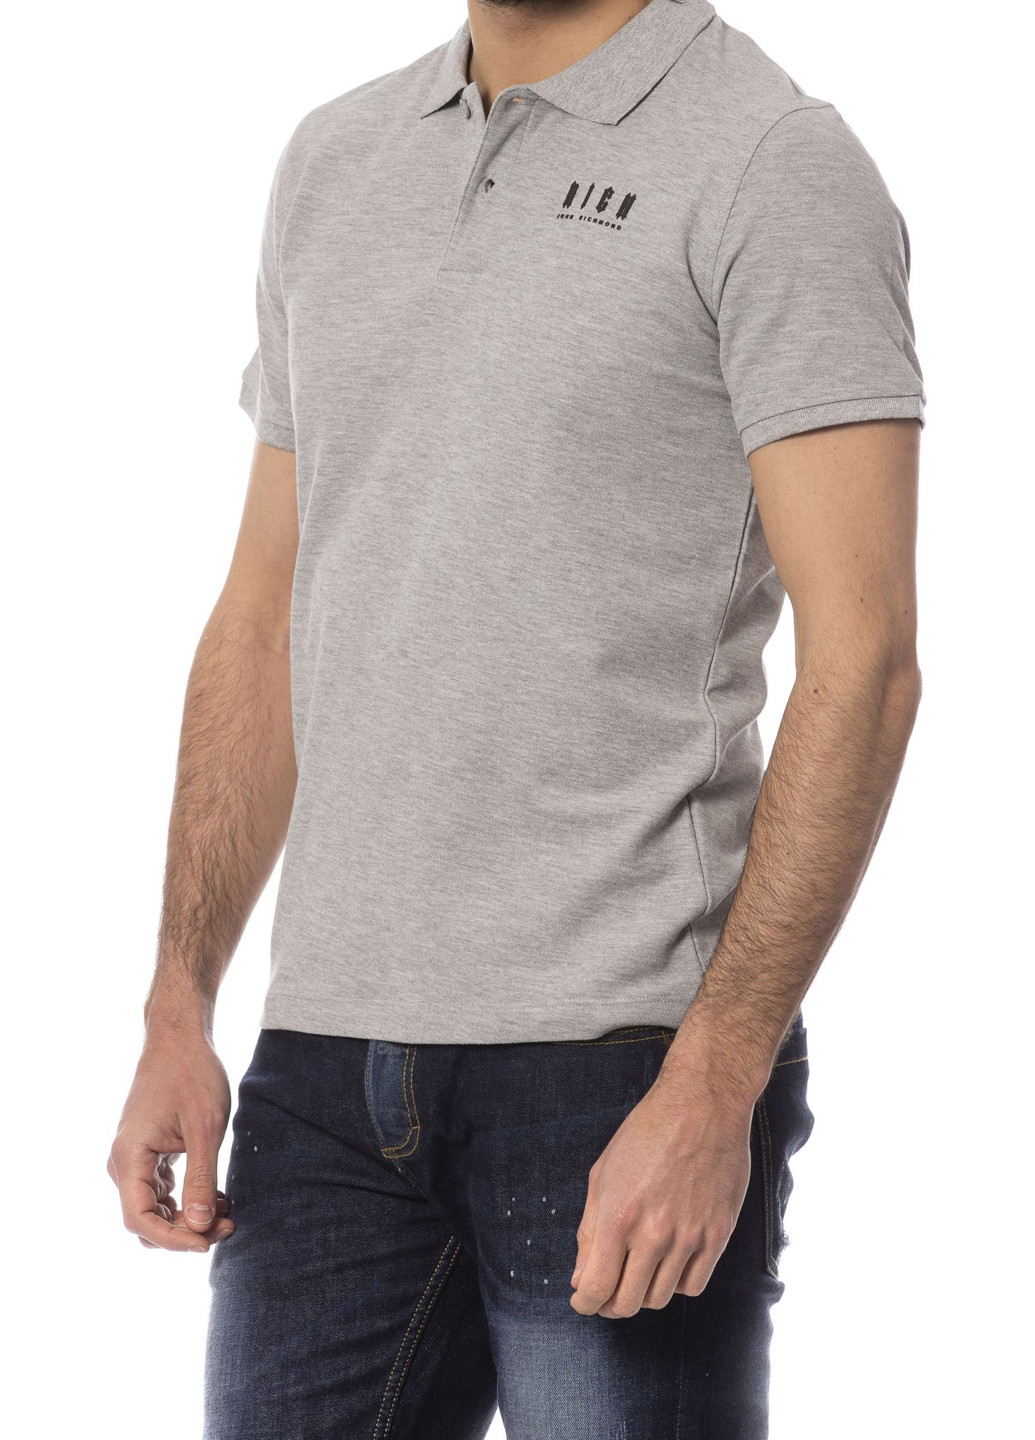 Серая футболка-поло для мужчин Richmond с логотипом